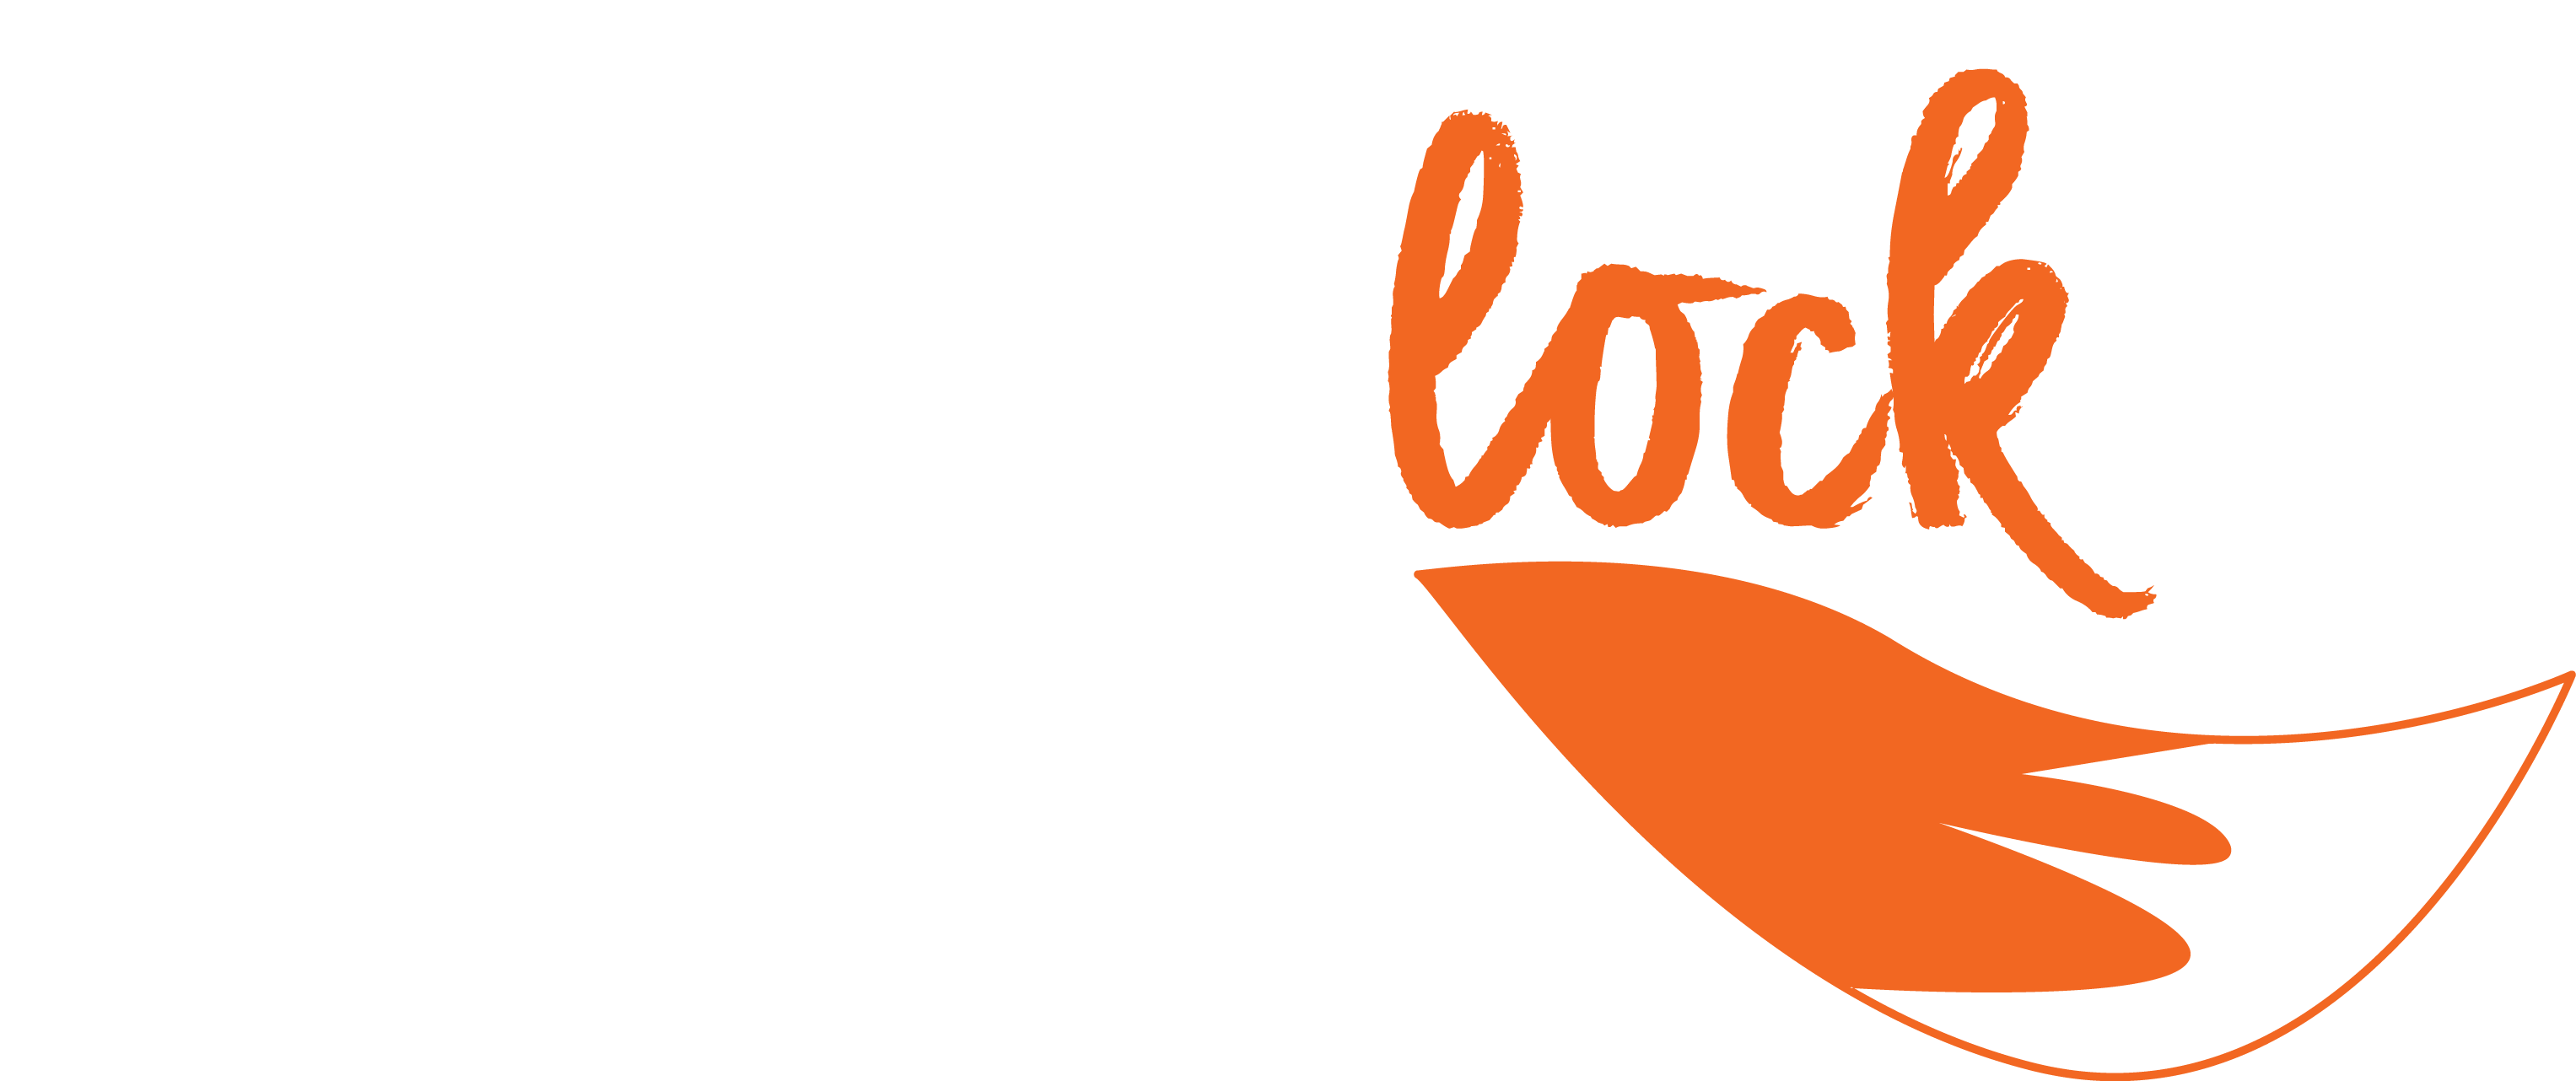 FOX O'CLOCK